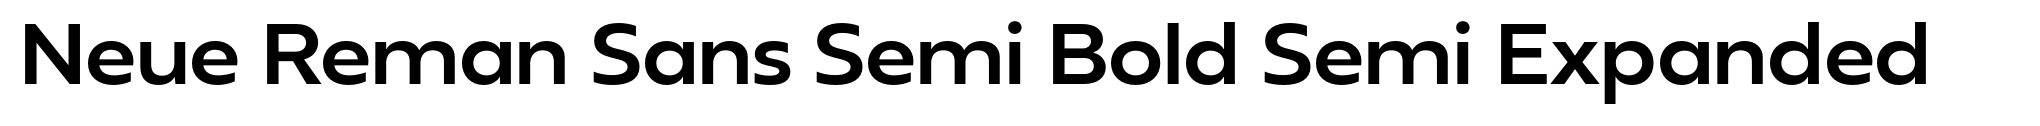 Neue Reman Sans Semi Bold Semi Expanded image